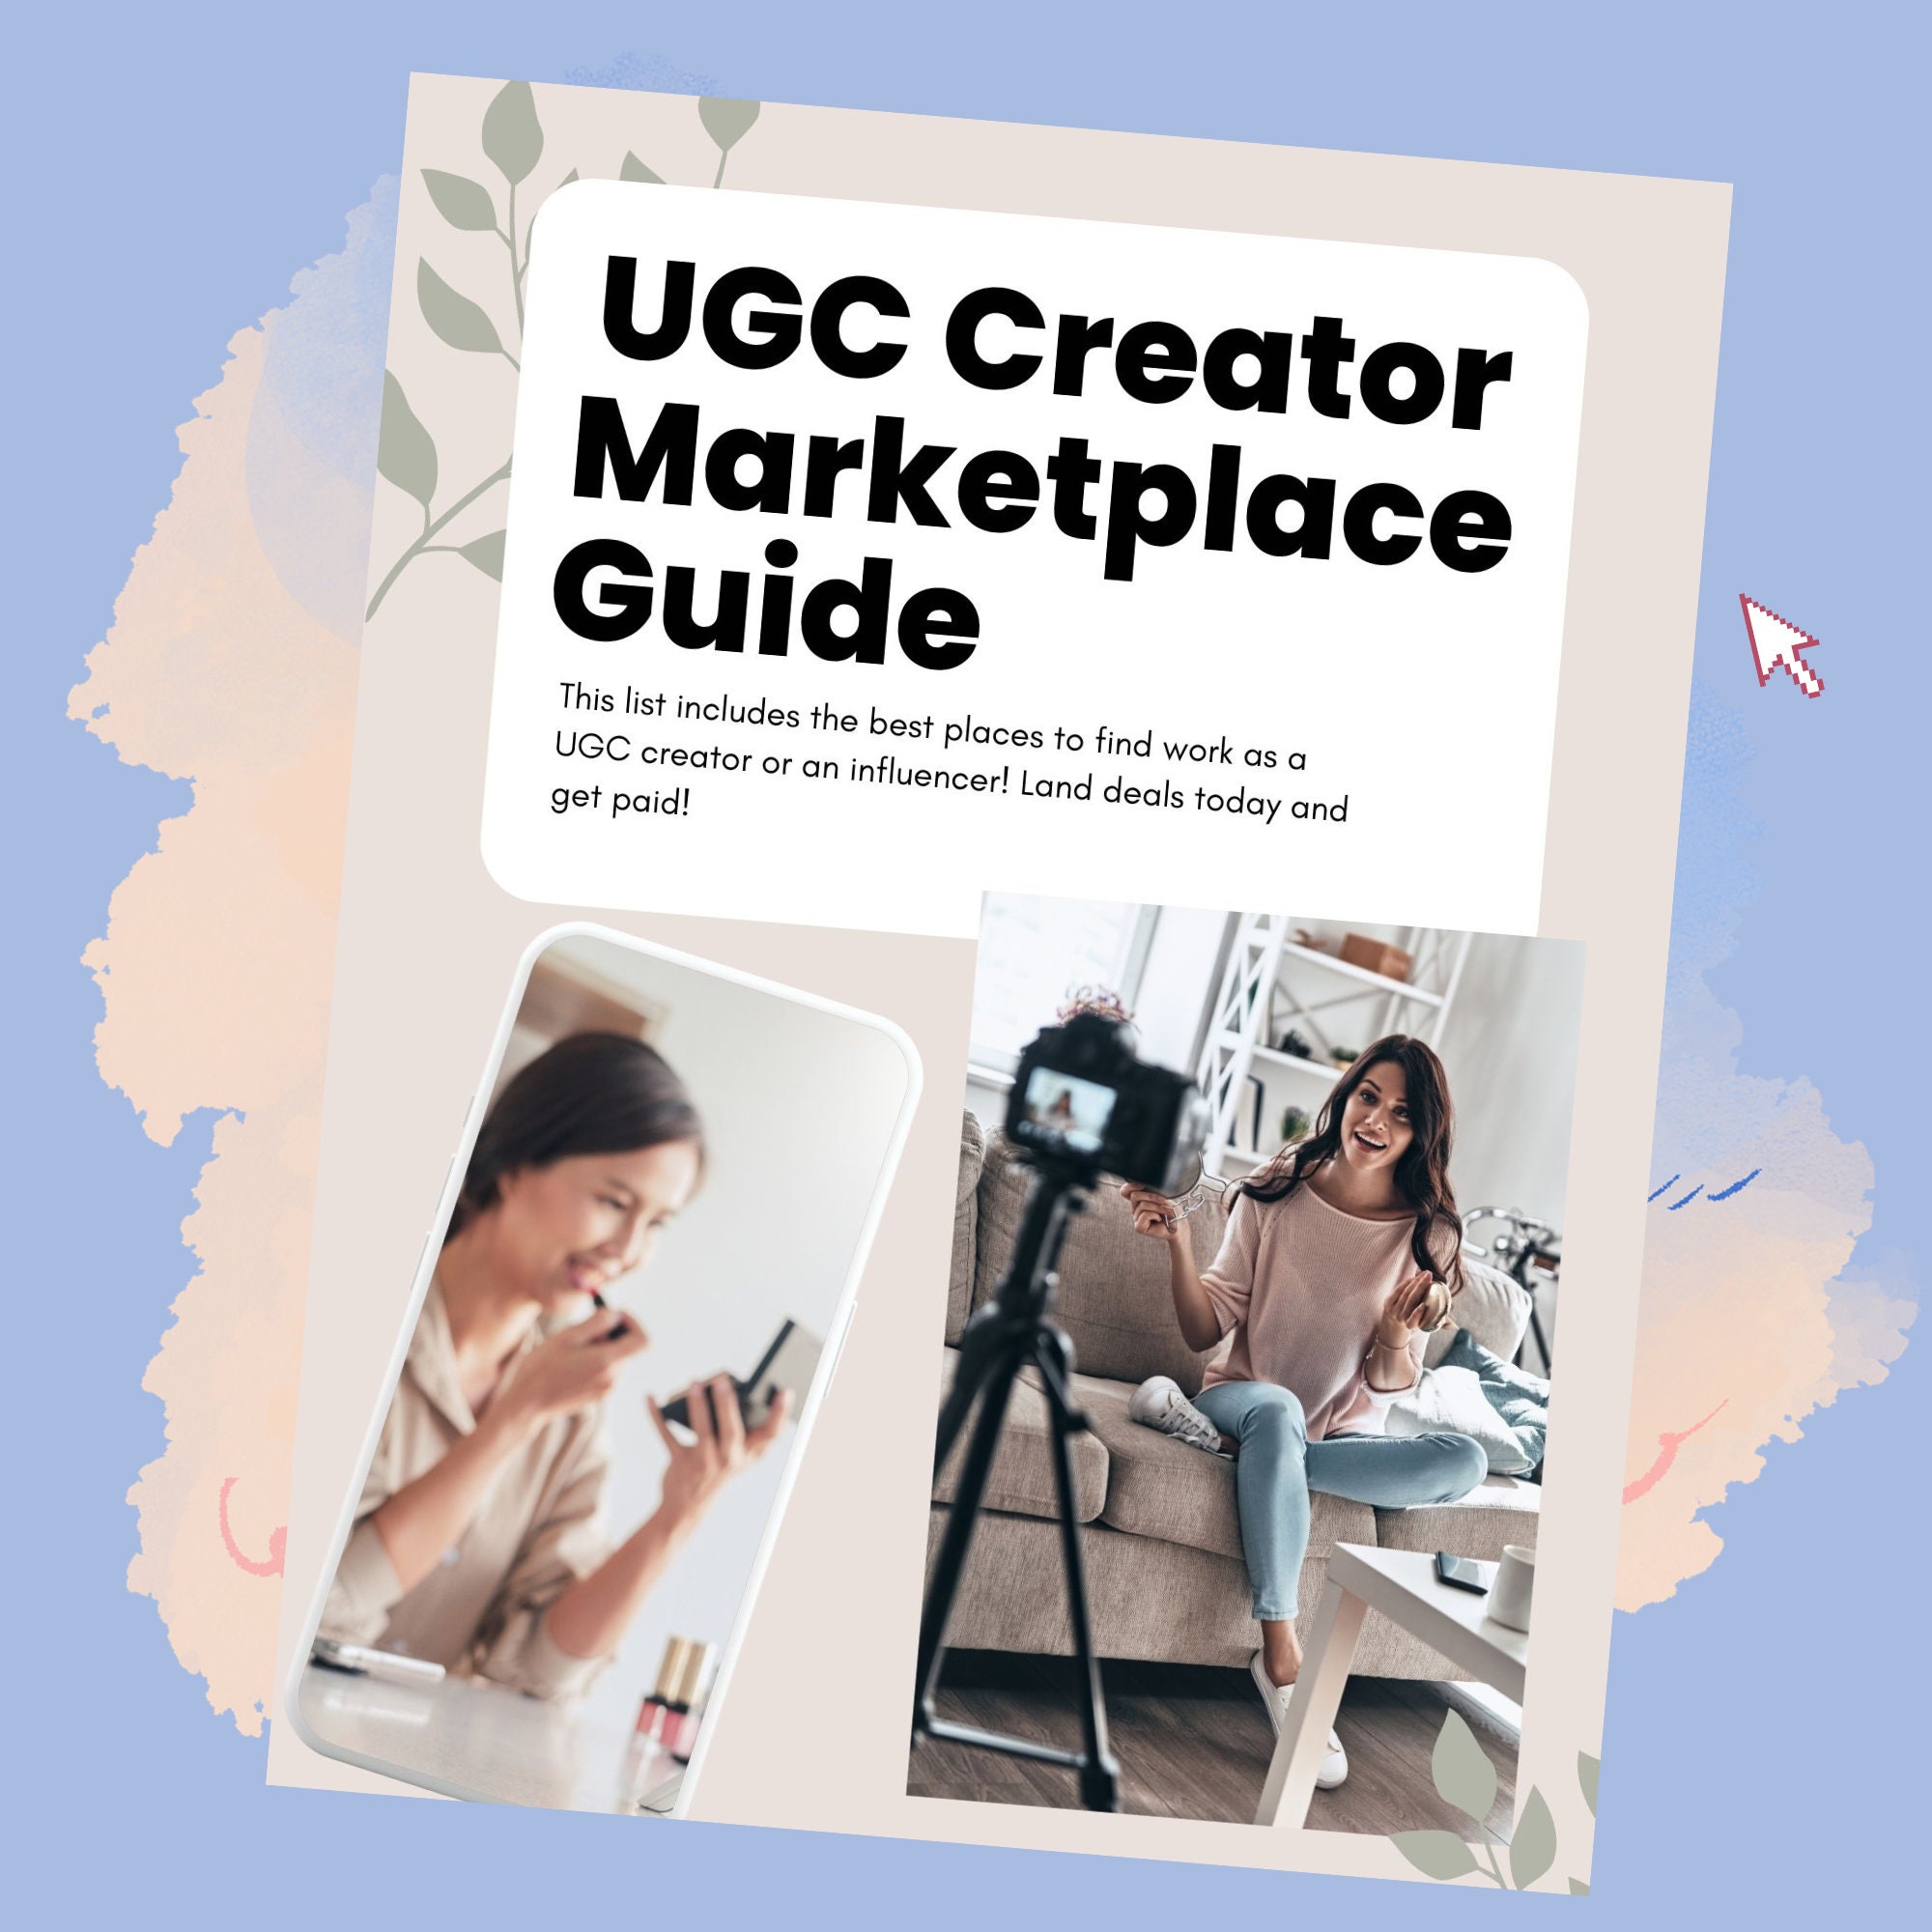 Images - Creator Marketplace